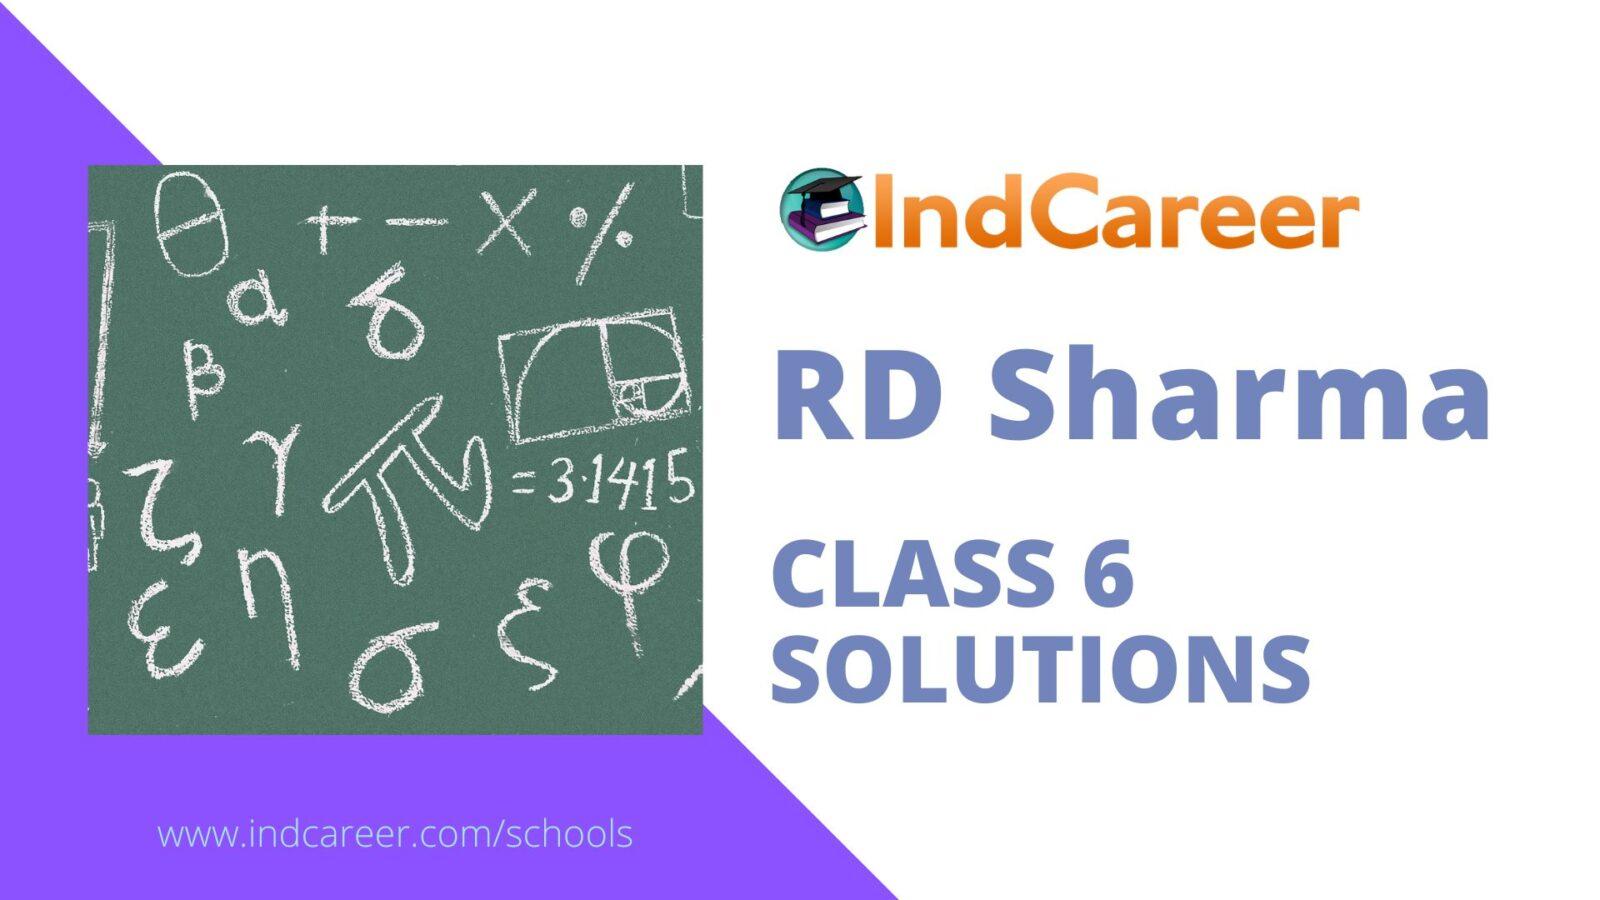 https://www.indcareer.com/schools/wp-content/uploads/2022/12/RD-Sharma-Class-6-Solutions-scaled.jpg